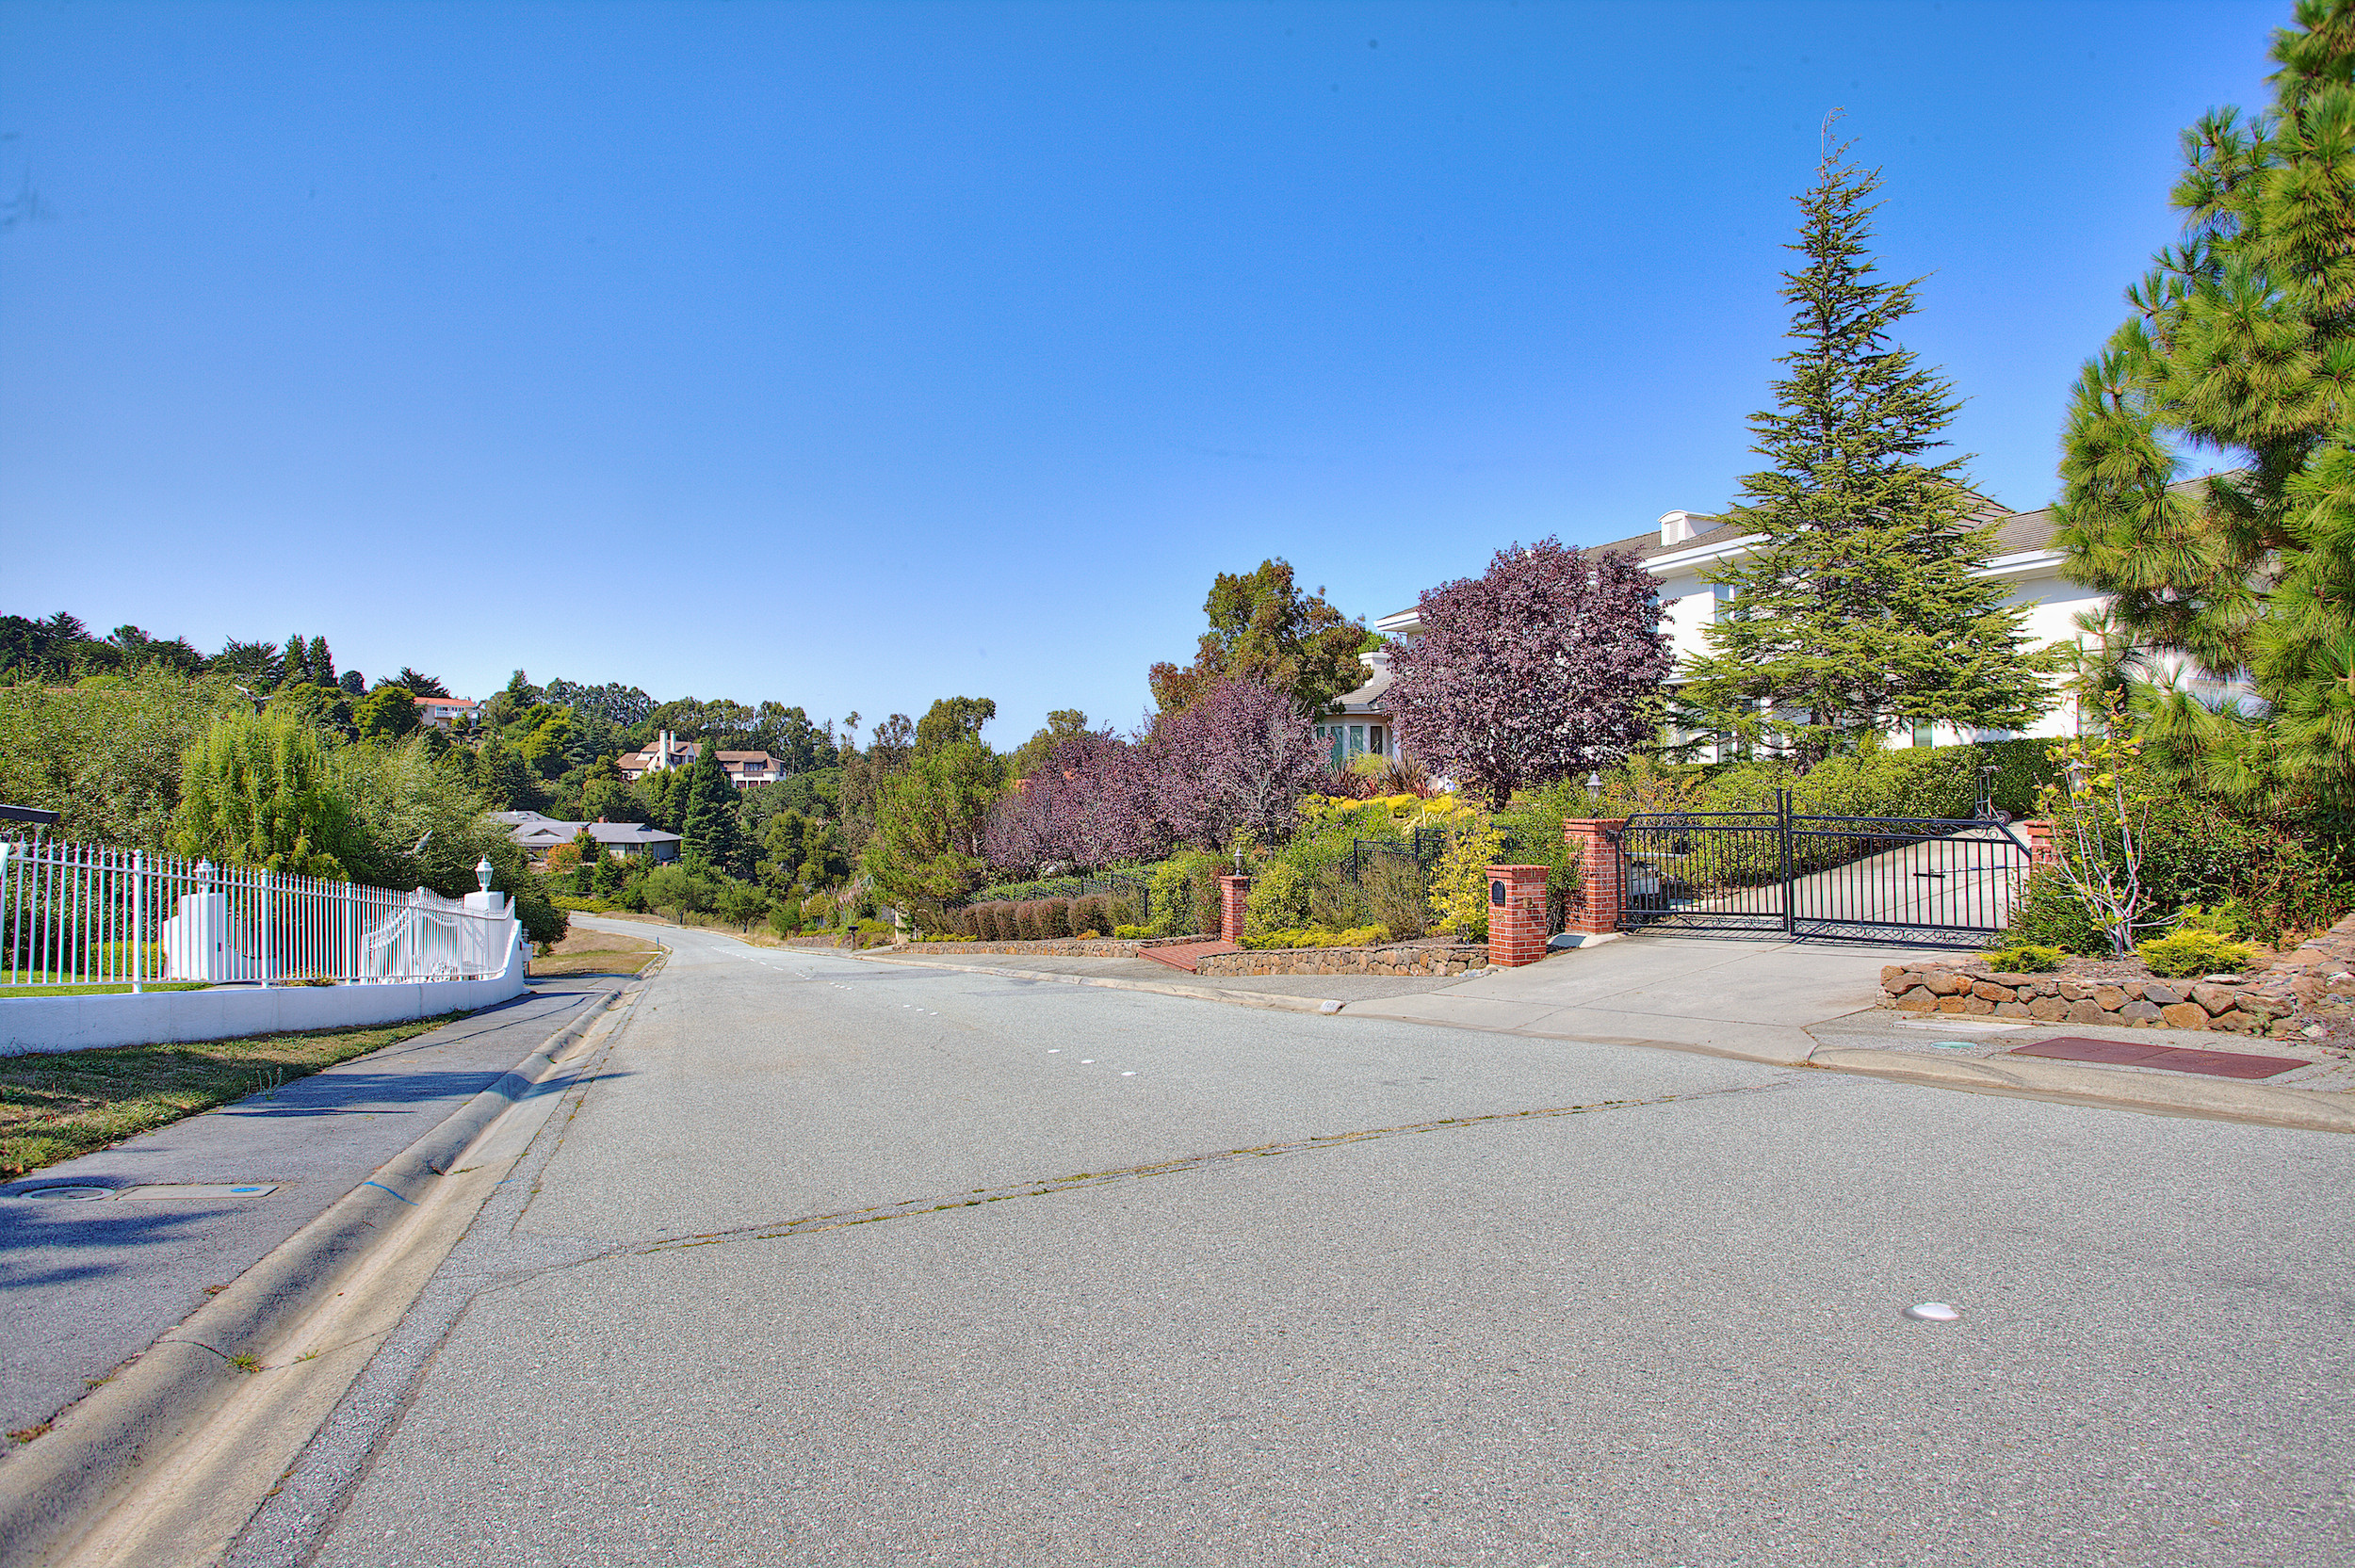 Street view in the Tobin Clarke Estate neighborhood in Hillsborough, CA